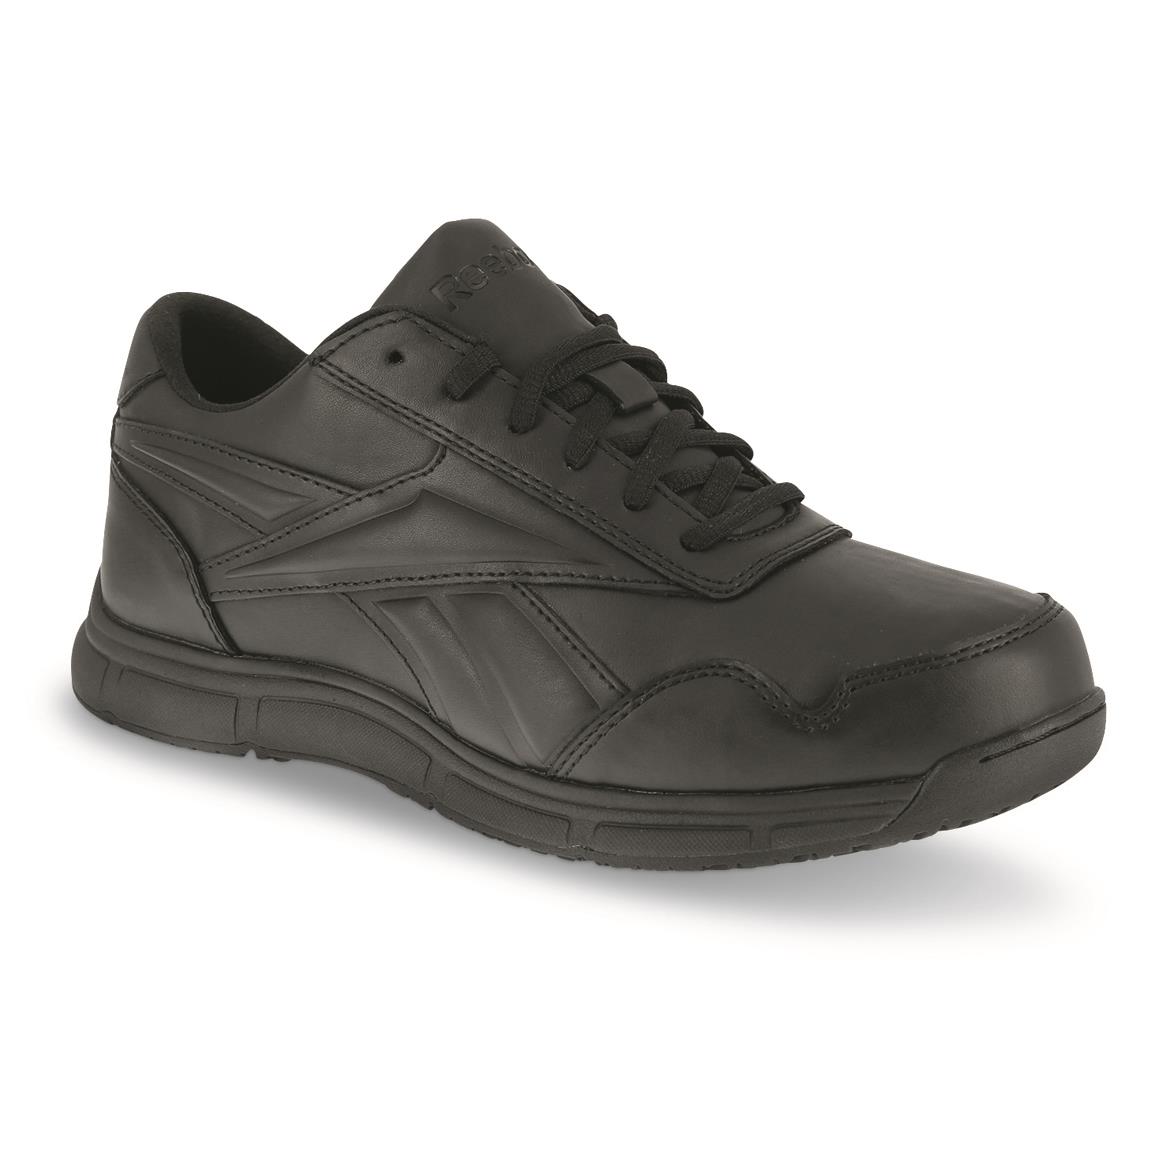 Reebok Men's Jorie LT Oxford Work Shoes, Black